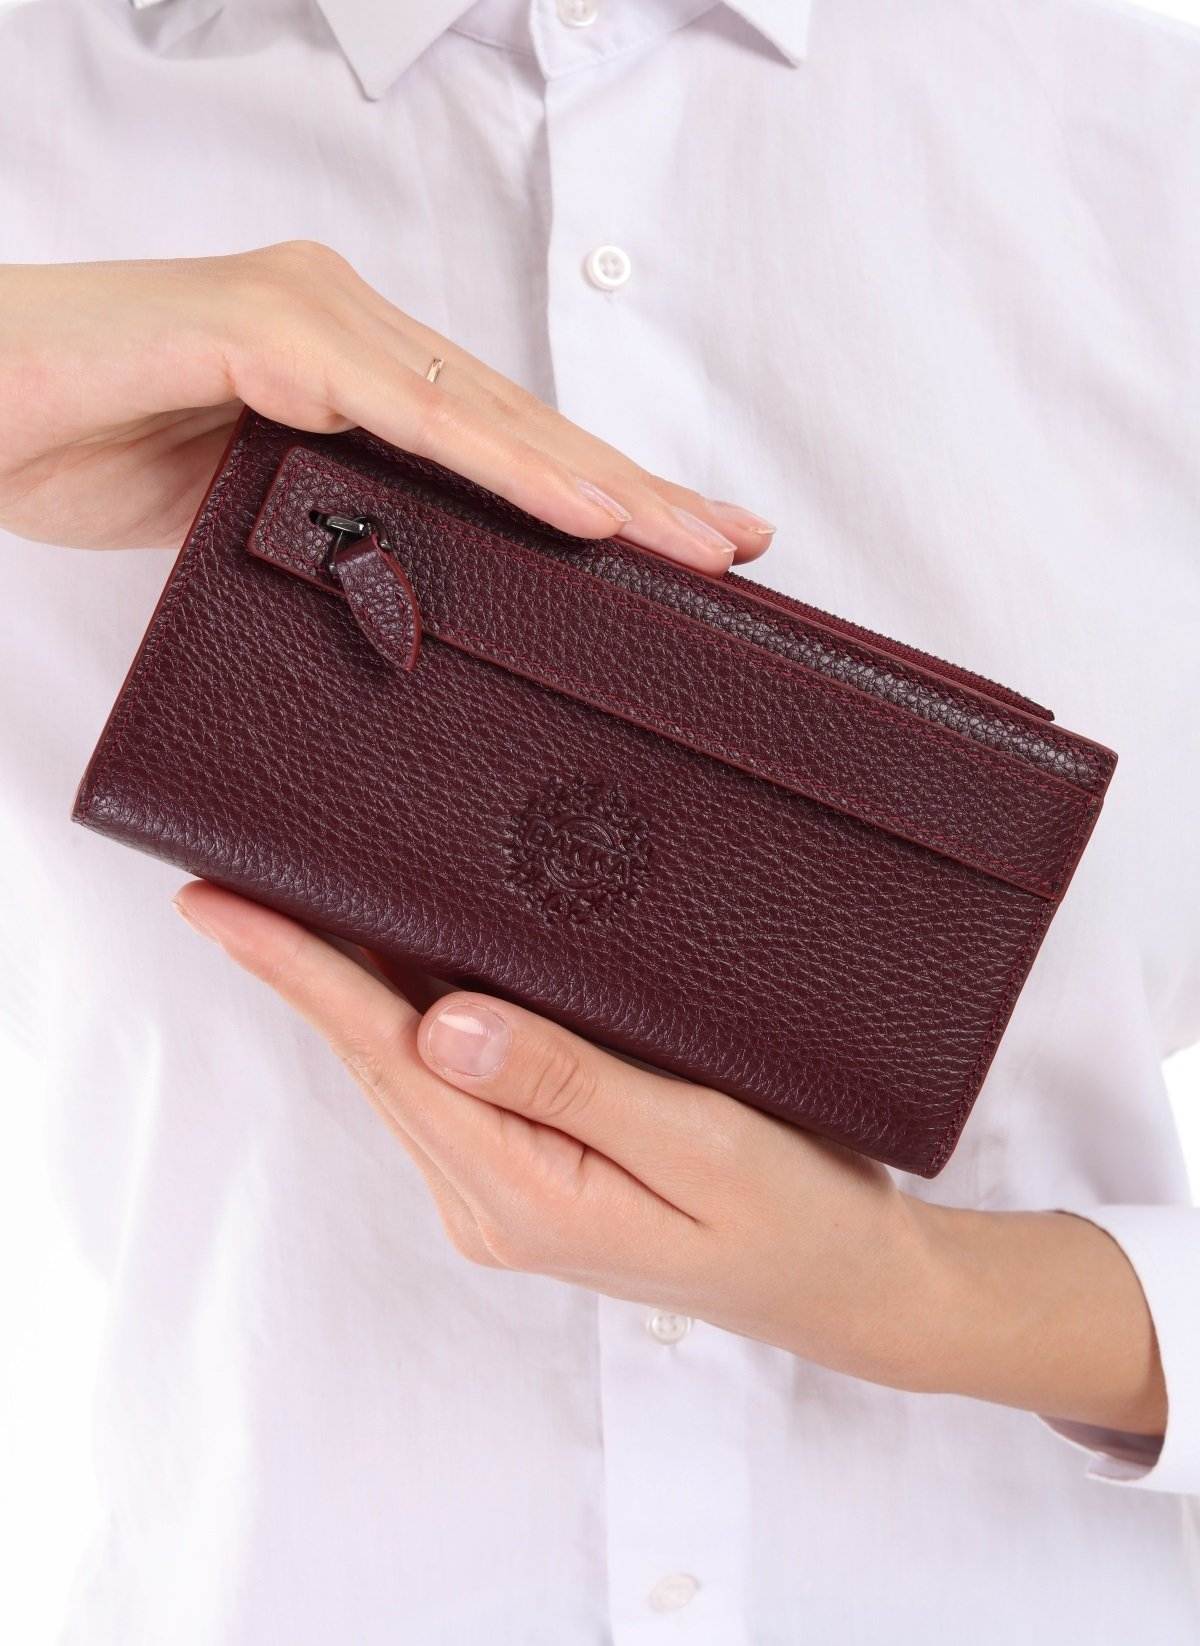 3760 - Leather wallet - bakkaclothing